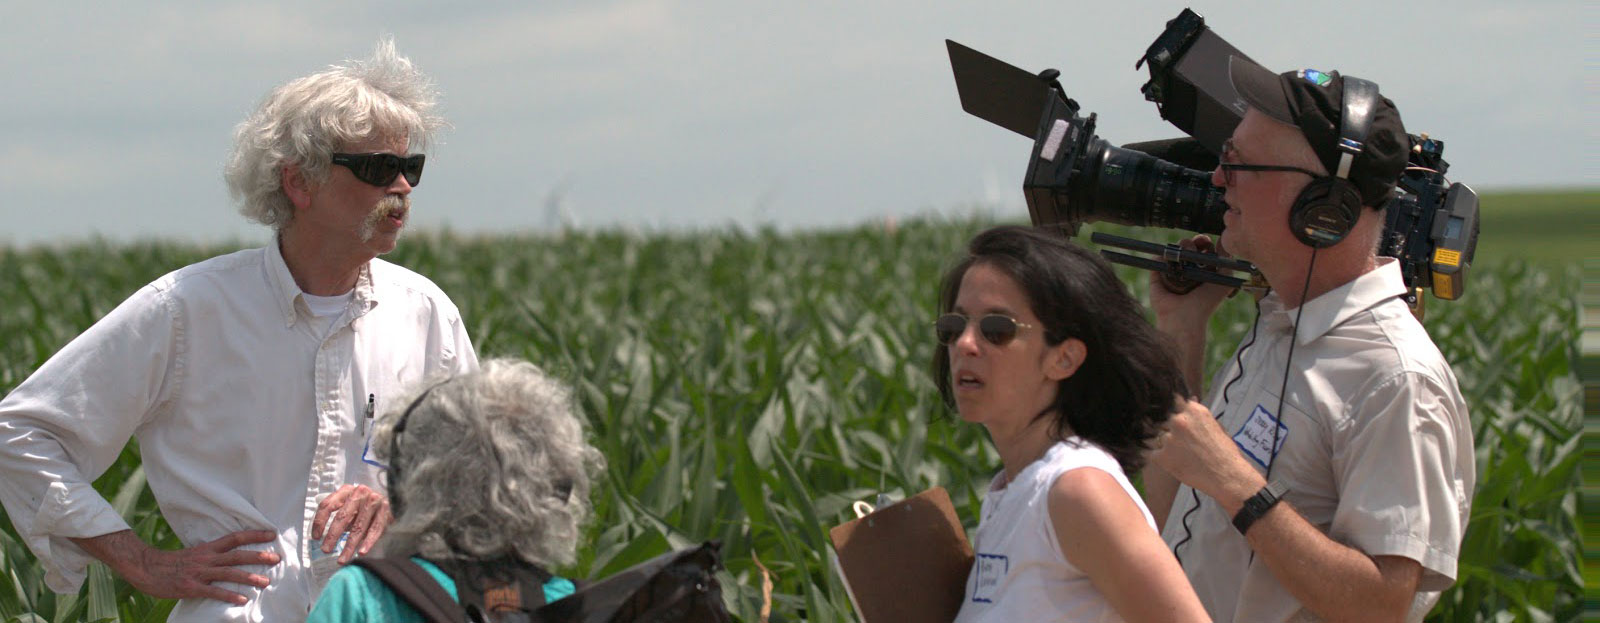 Storm lake film crew in a corn field